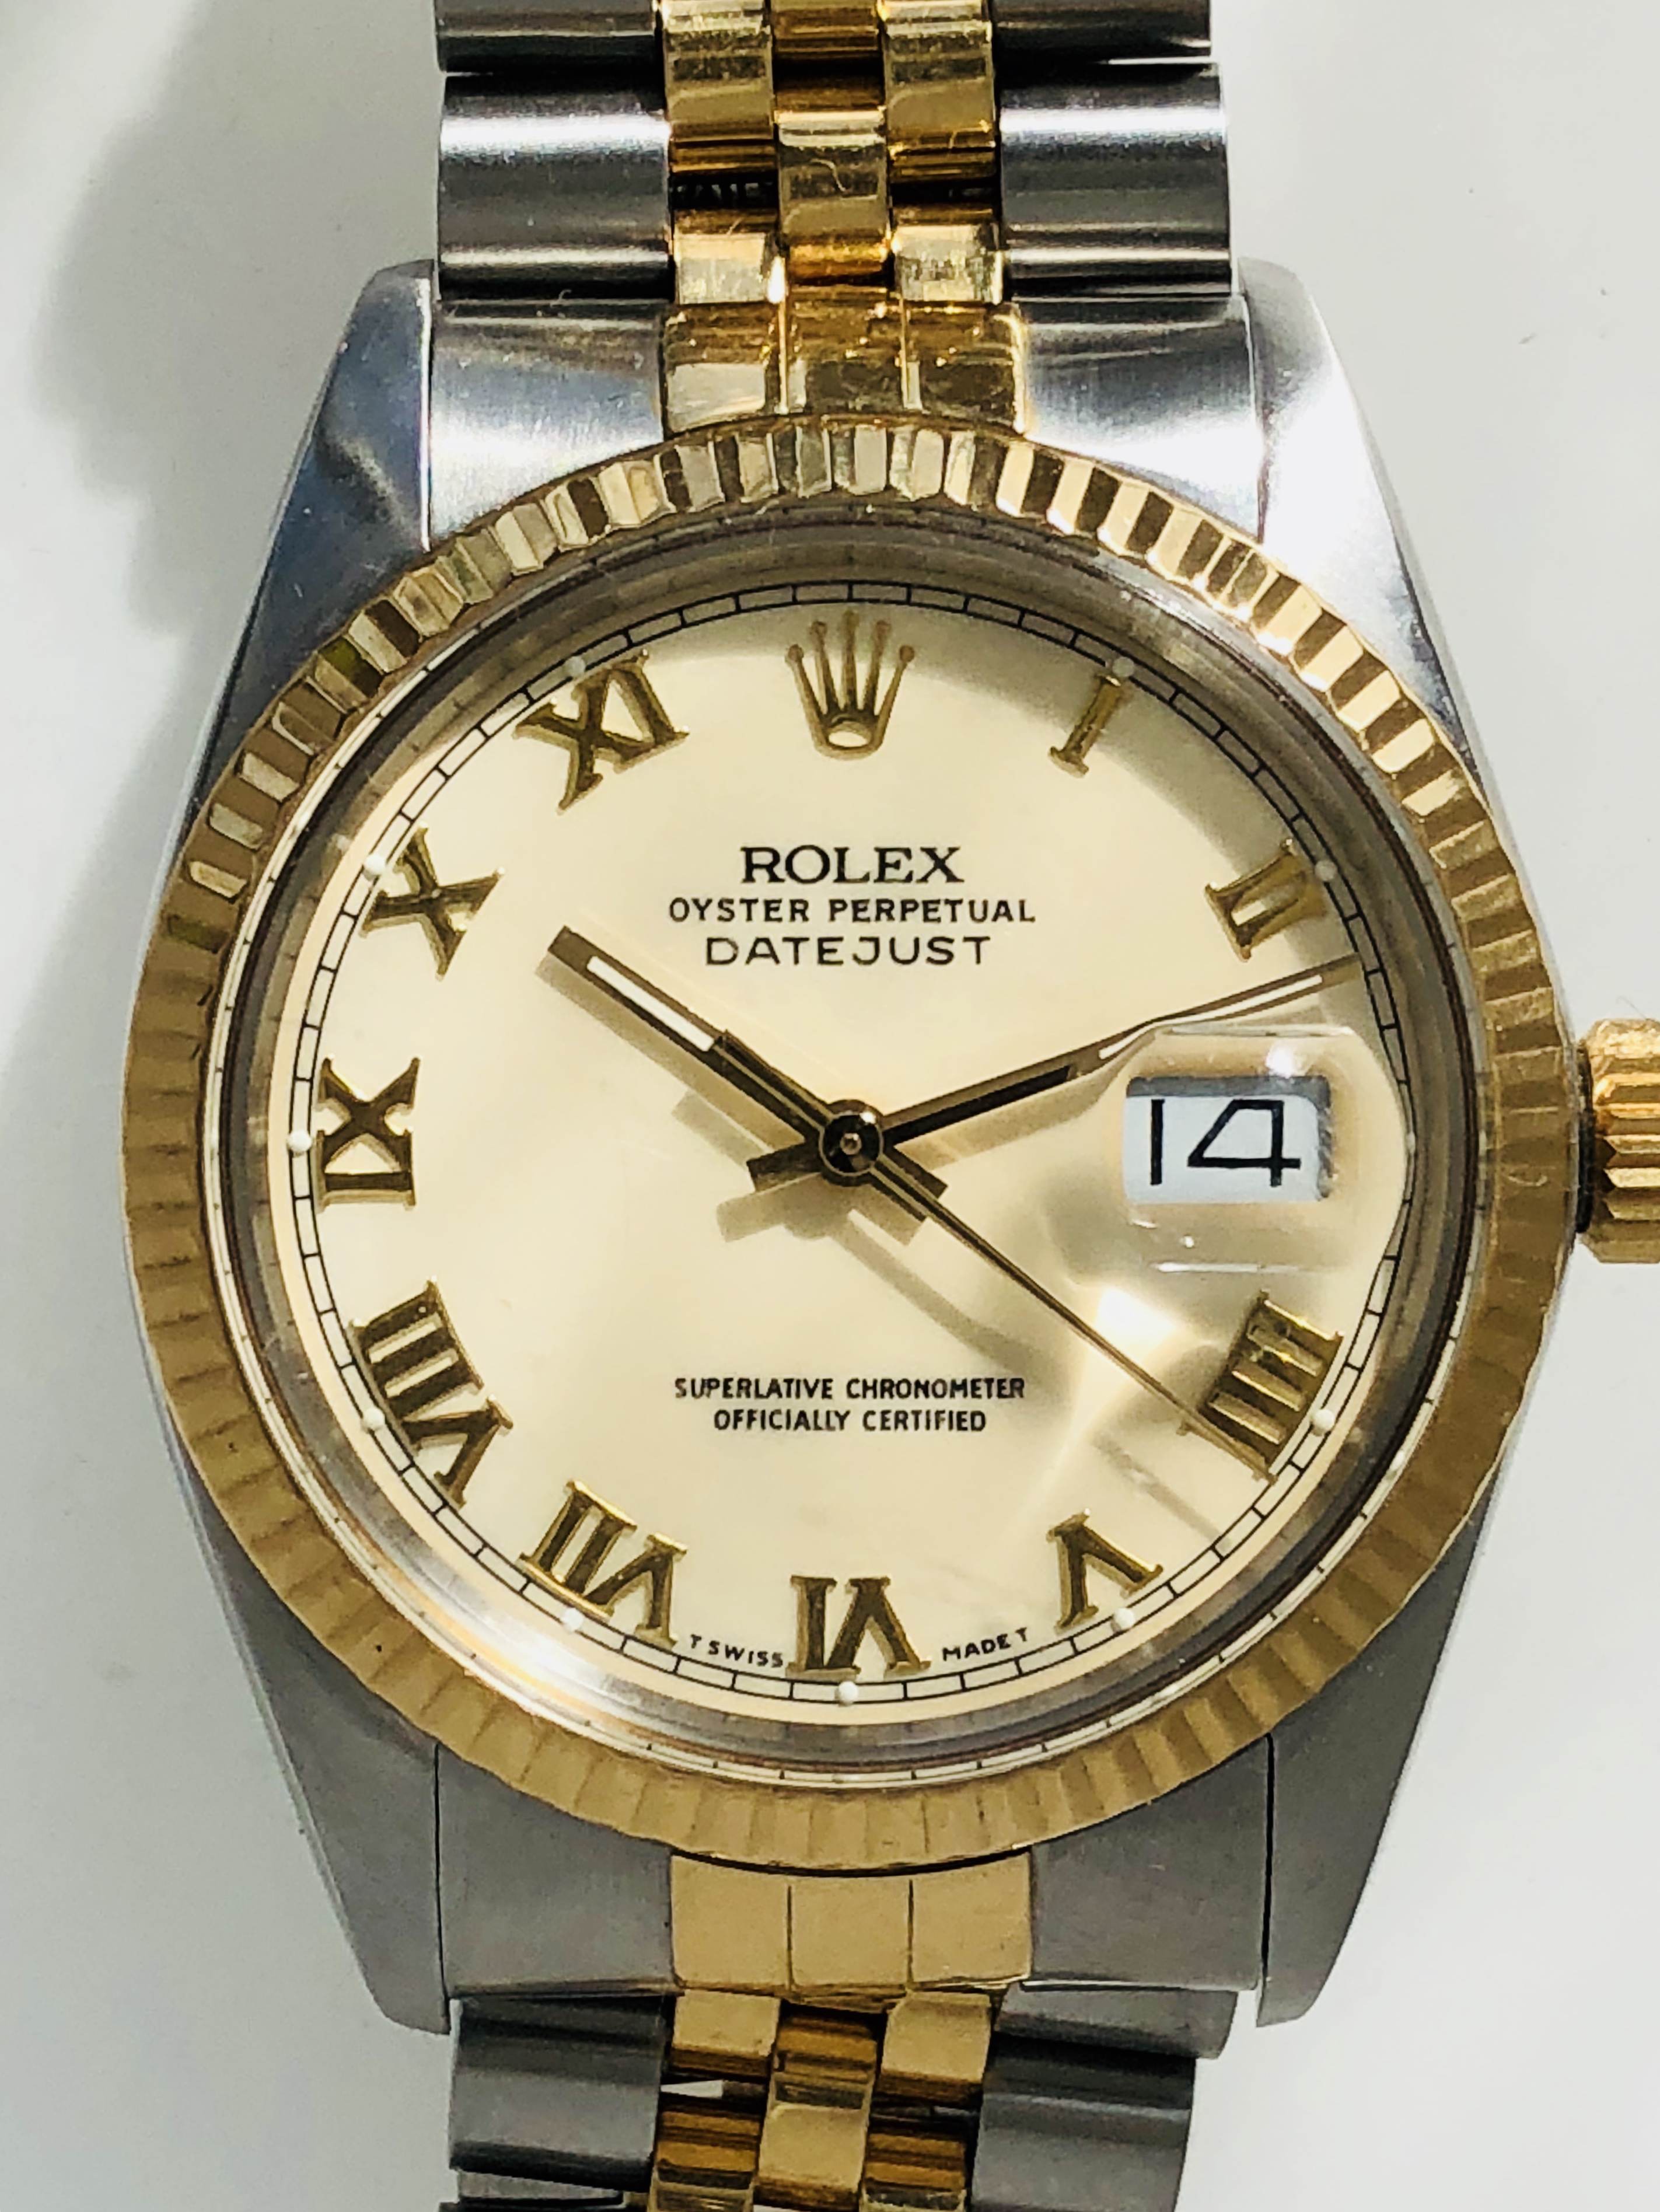 rolex datejust superlative chronometer officially certified